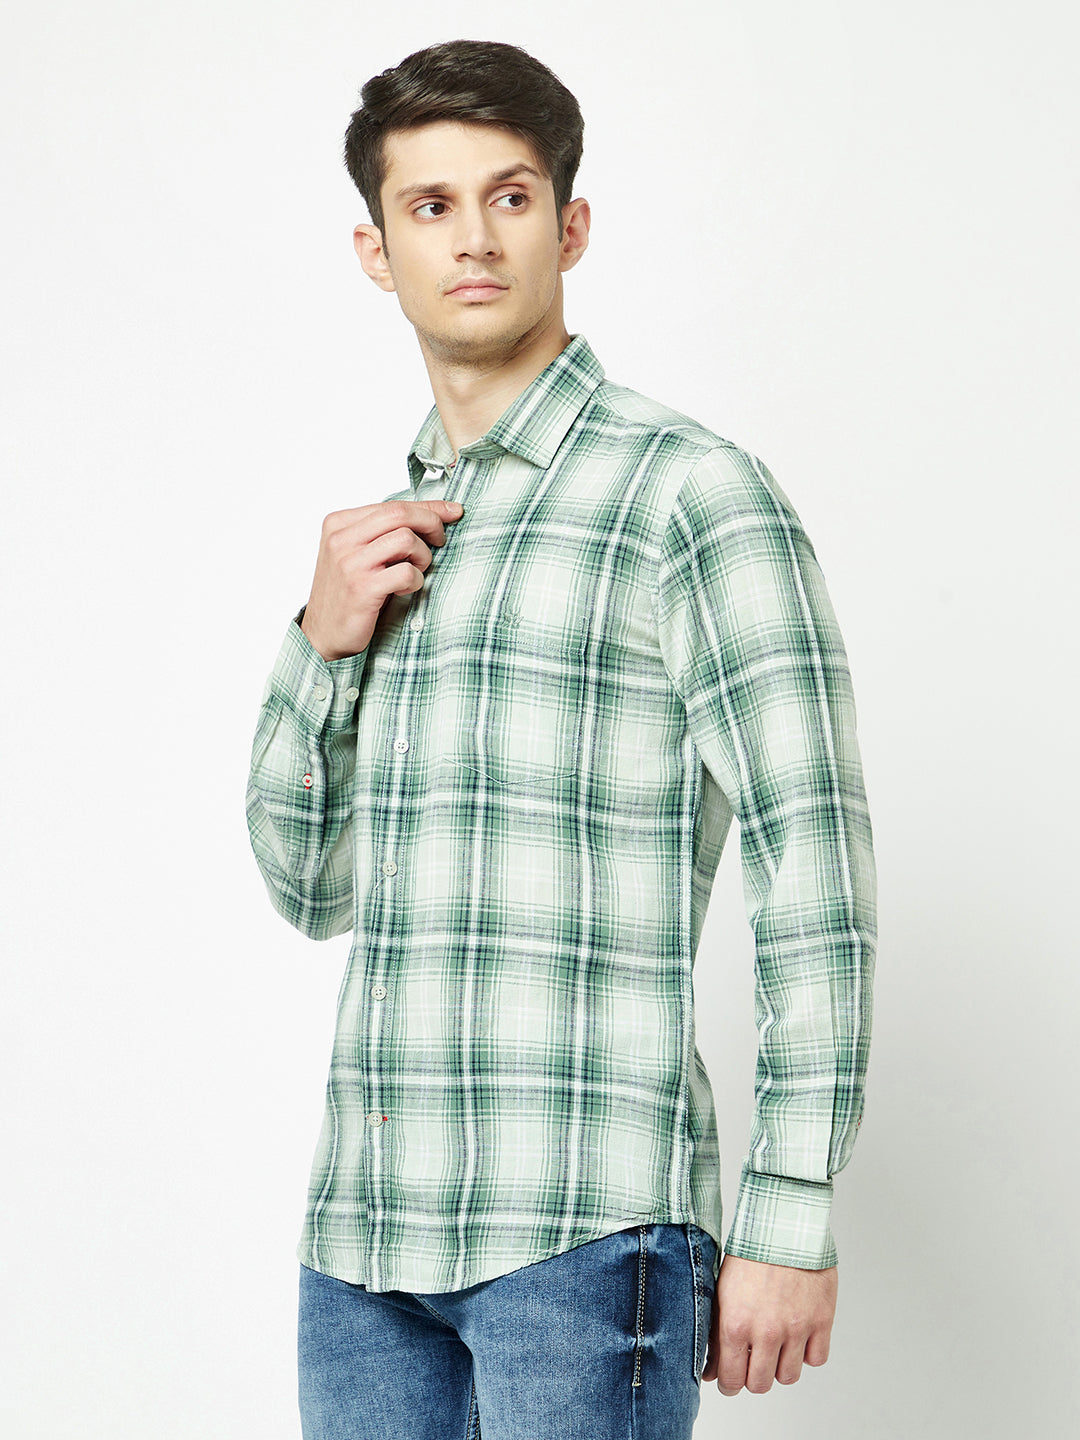  Green-Toned Checkered Shirt